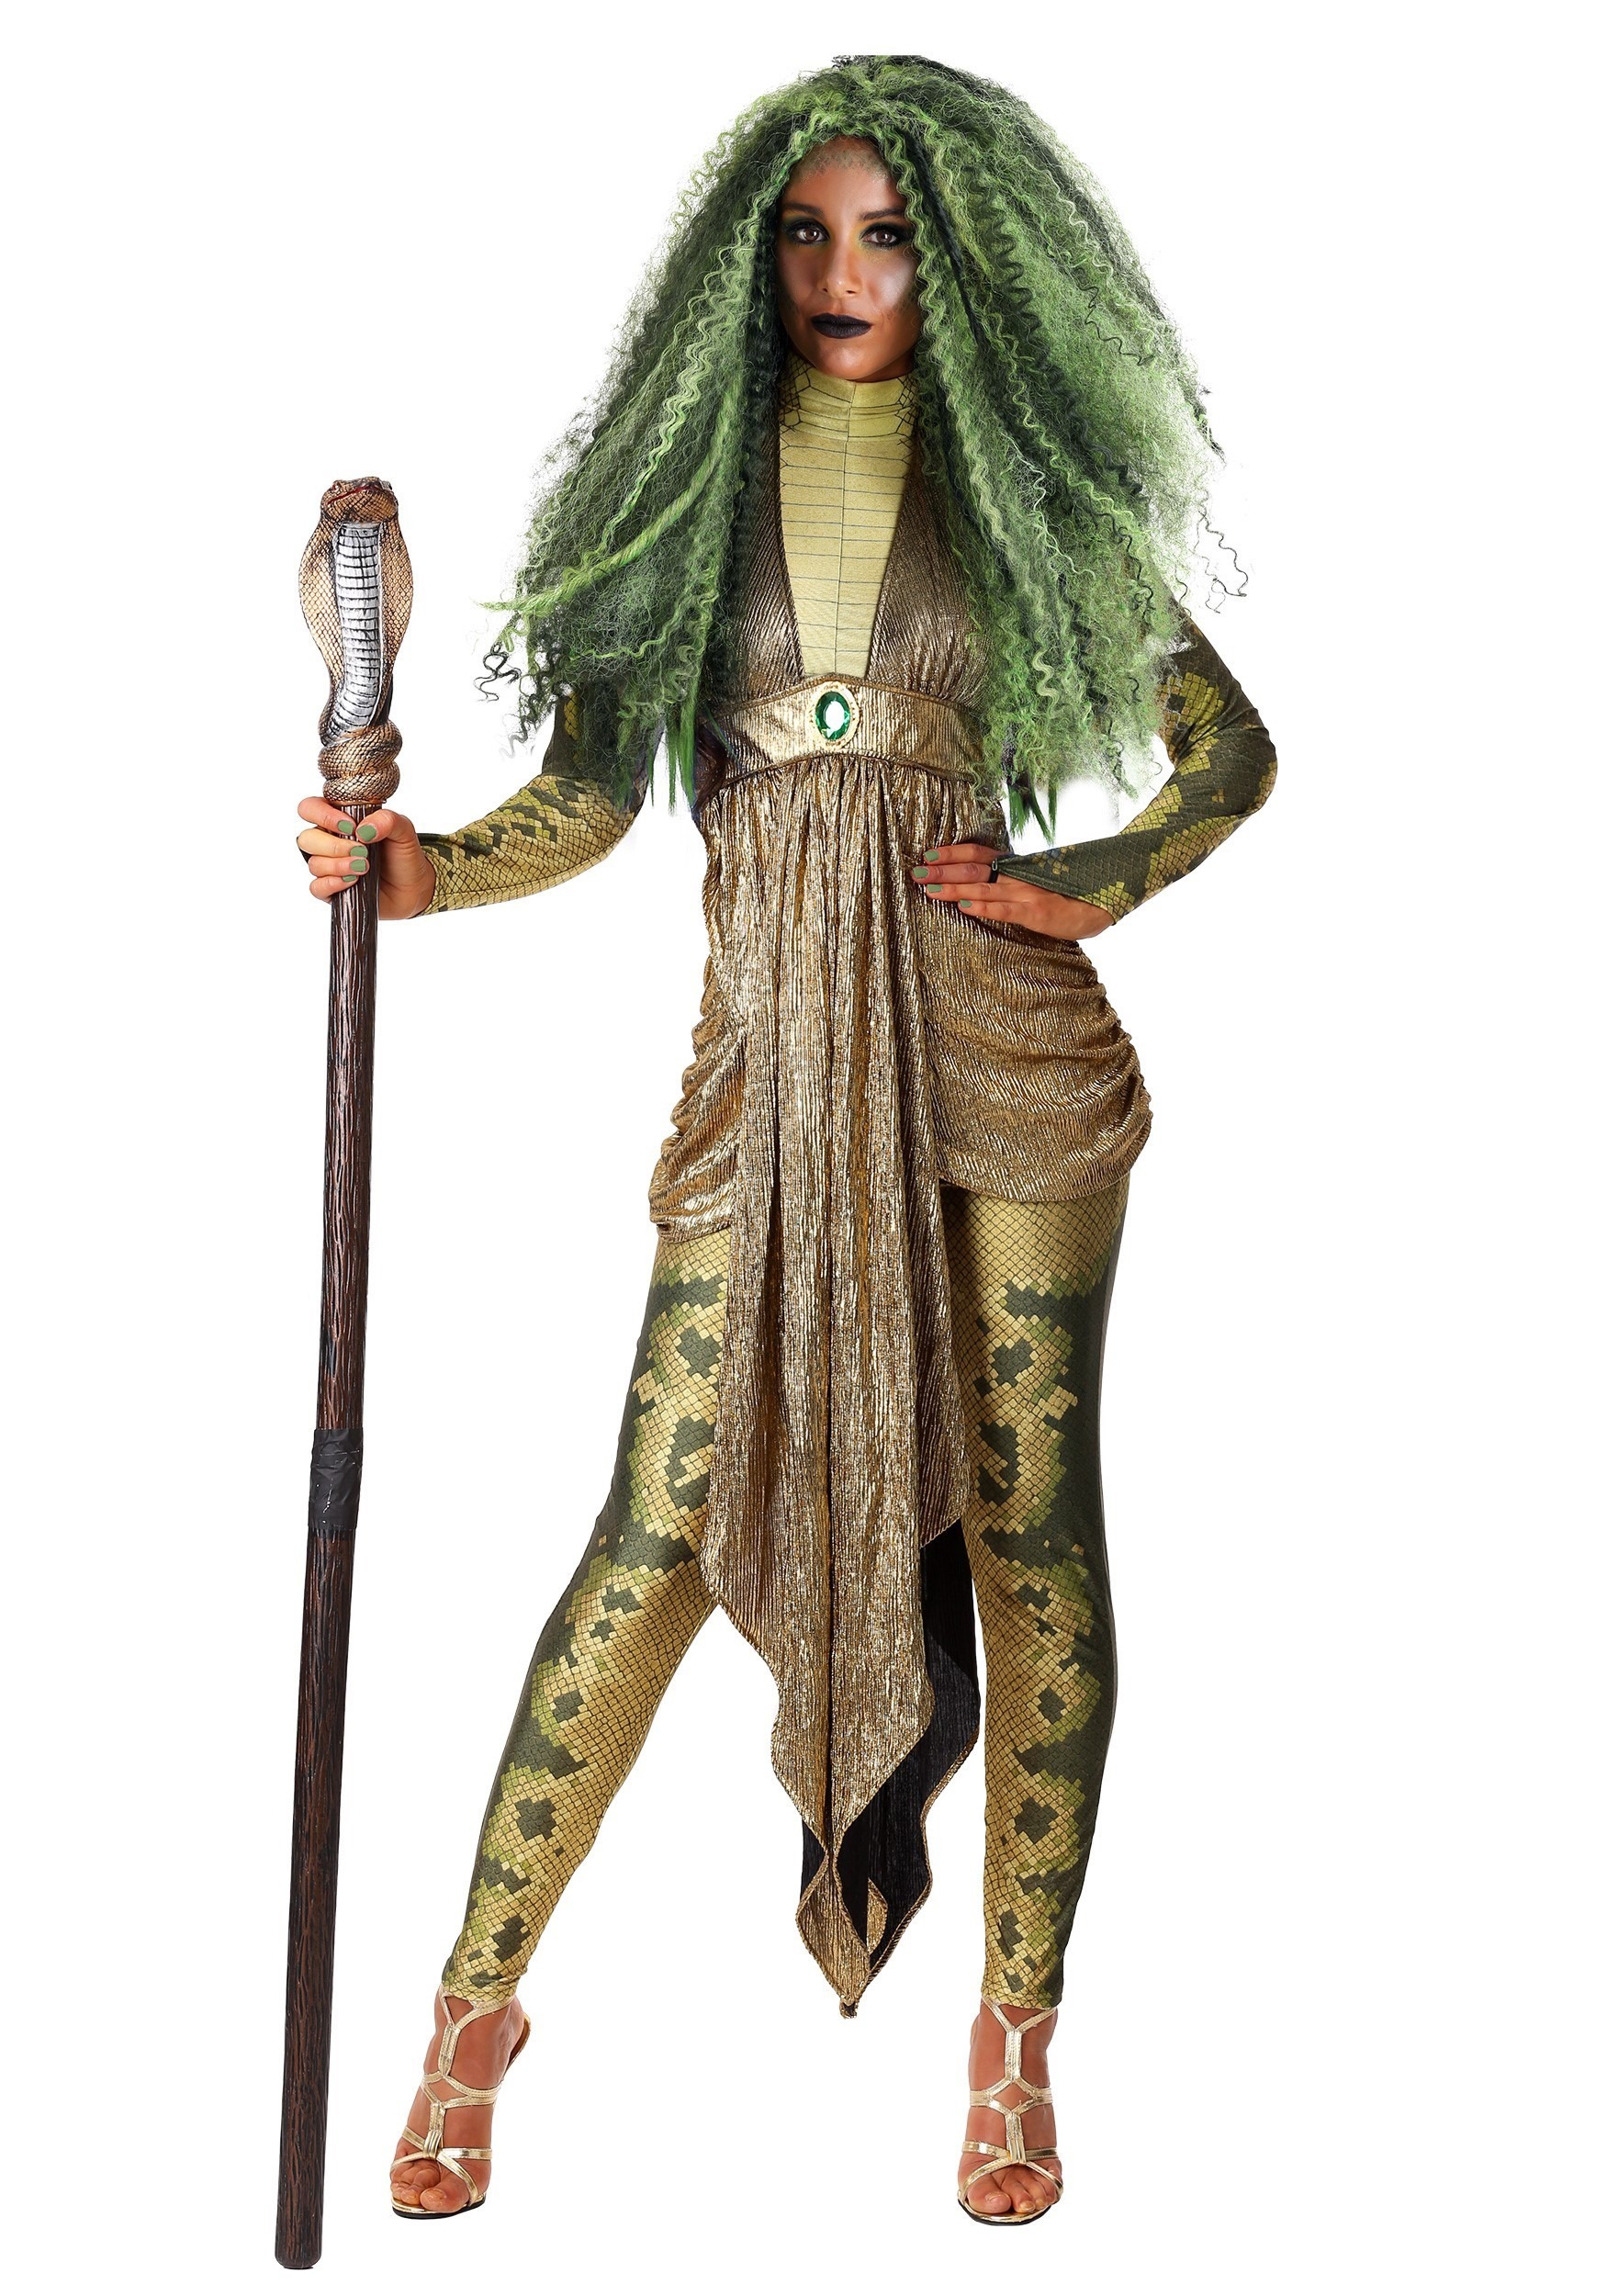 Photos - Fancy Dress Deluxe FUN Costumes Plus Size  Medusa Women's Costume Brown/Green FUN64 